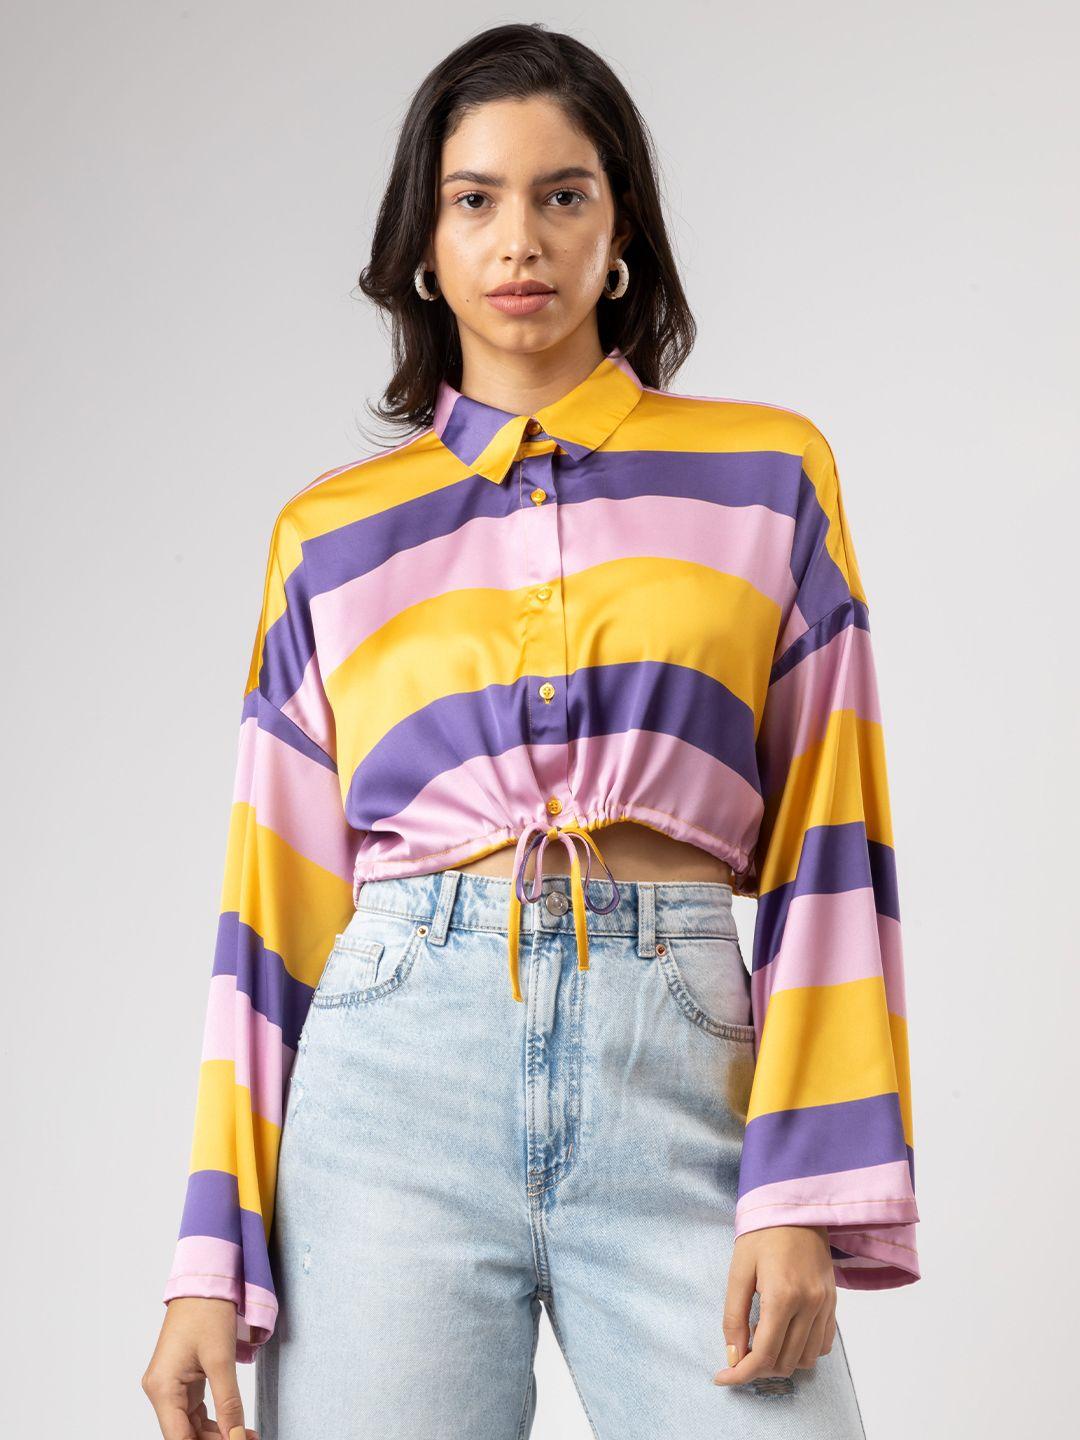 h&m-vibrant-bold-striped-shirt